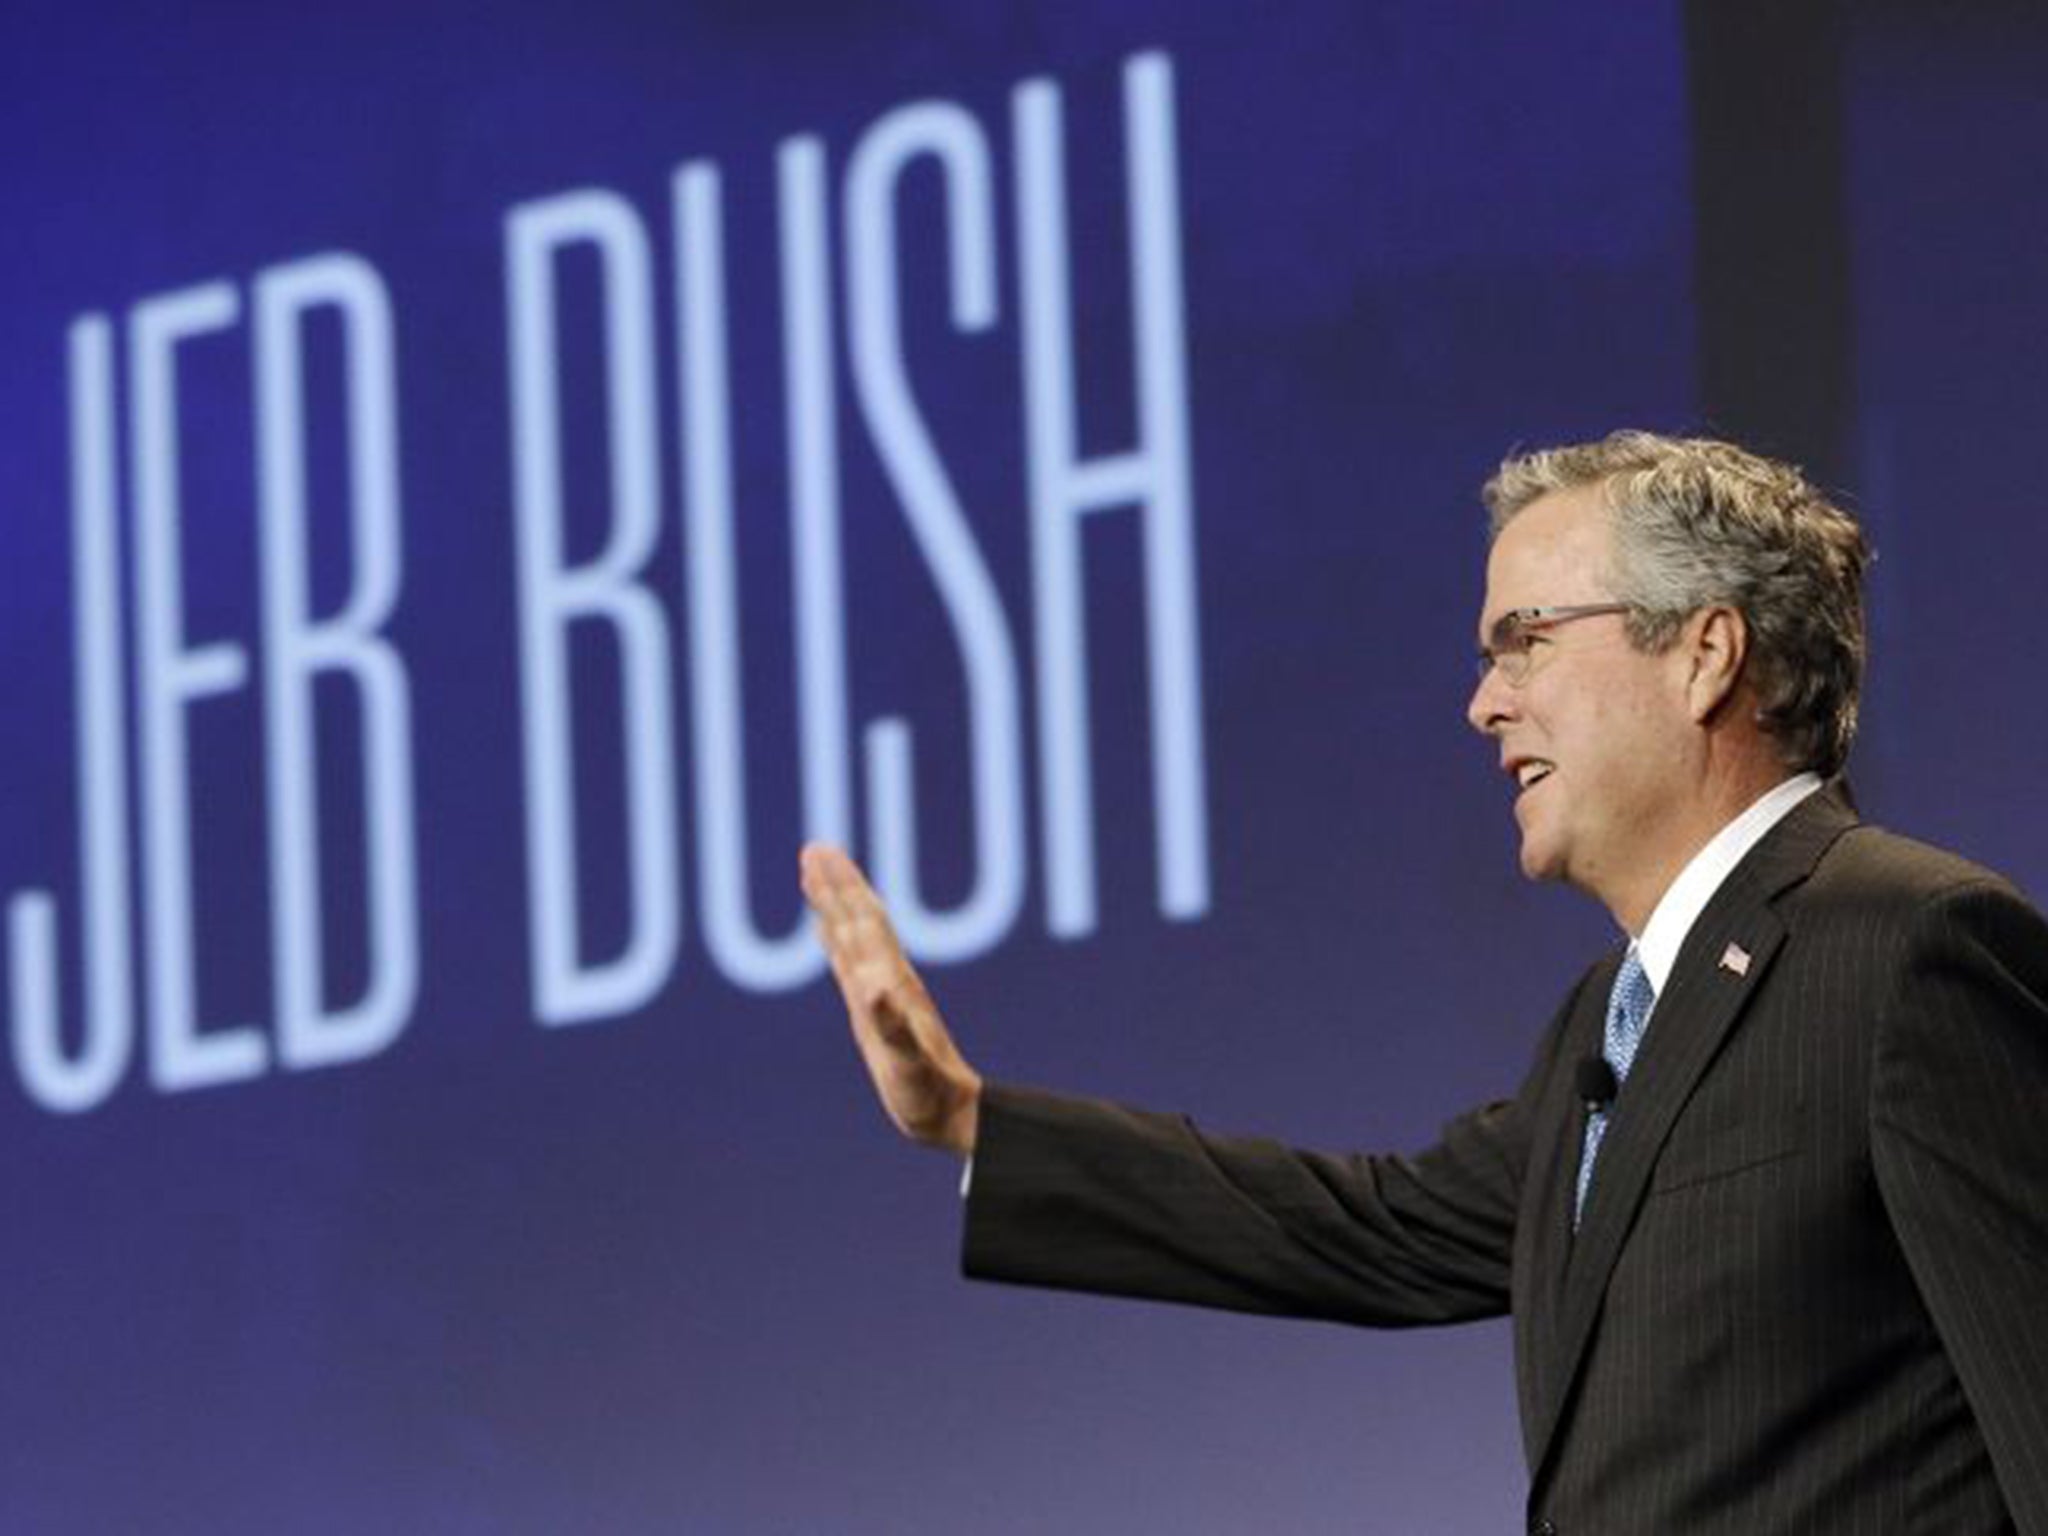 George Bush Snr’s son, Jeb